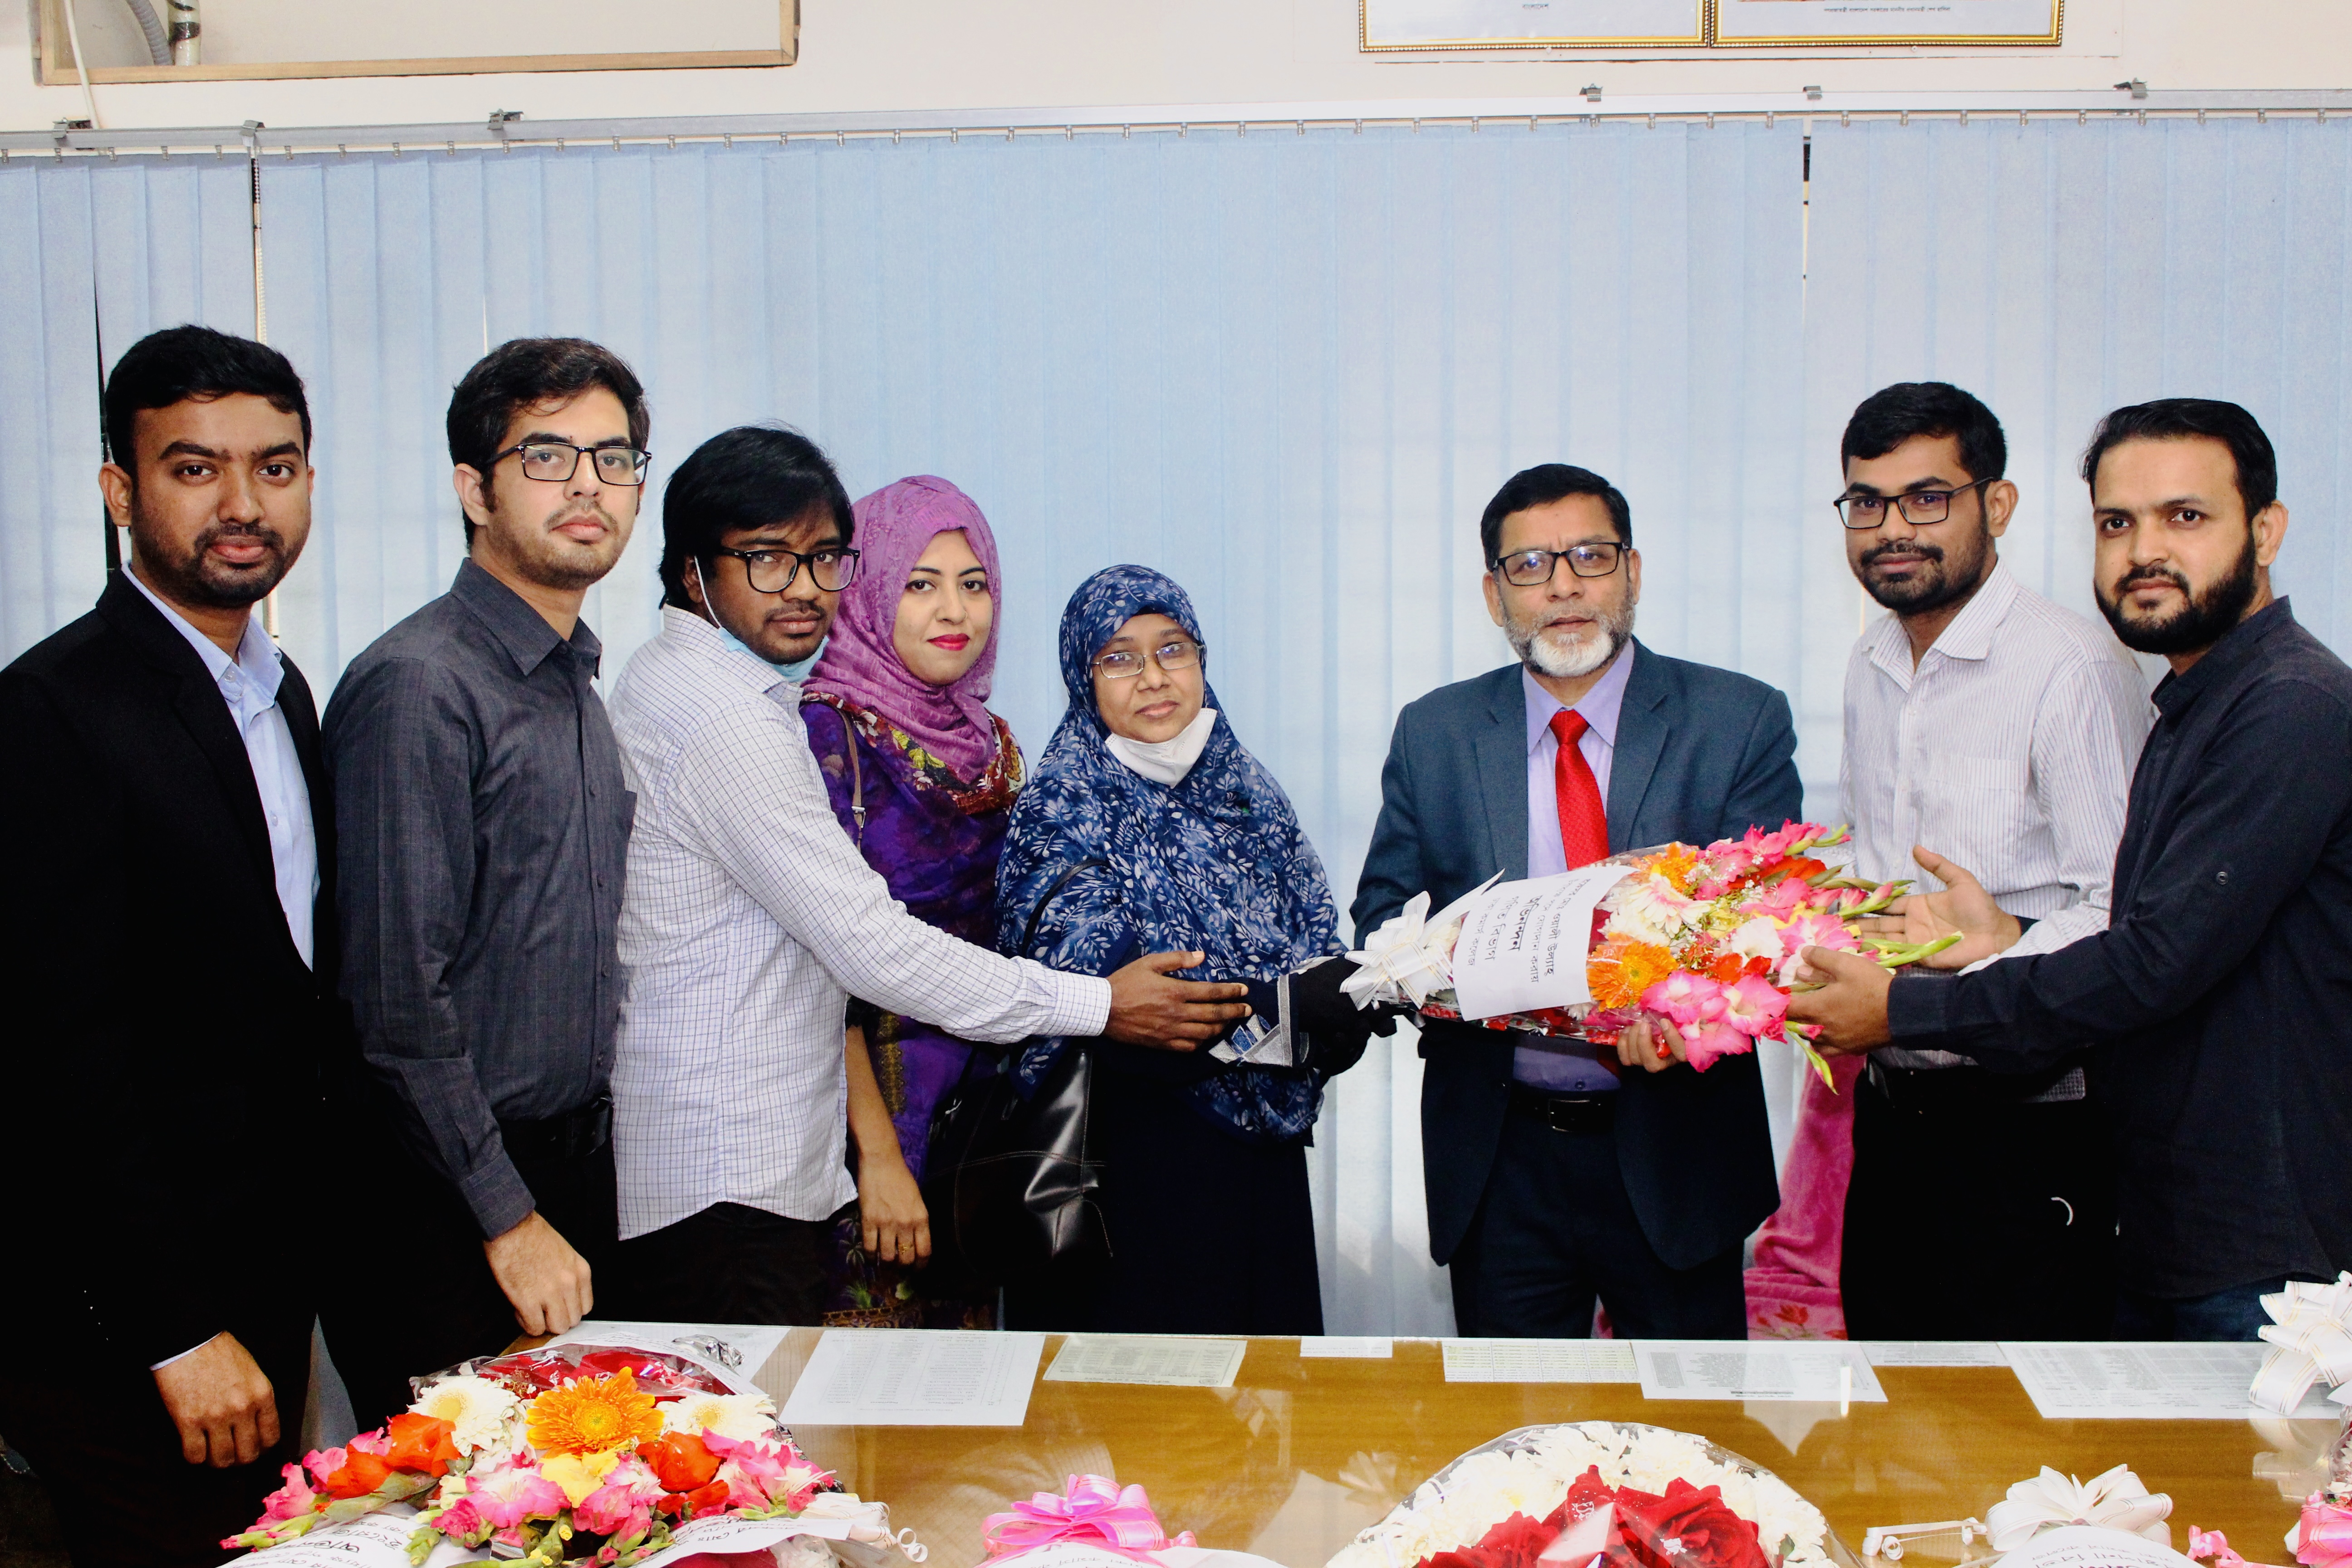 Reception to Vice Principal Prof. Md. Wali Ullah by Mathematics Department